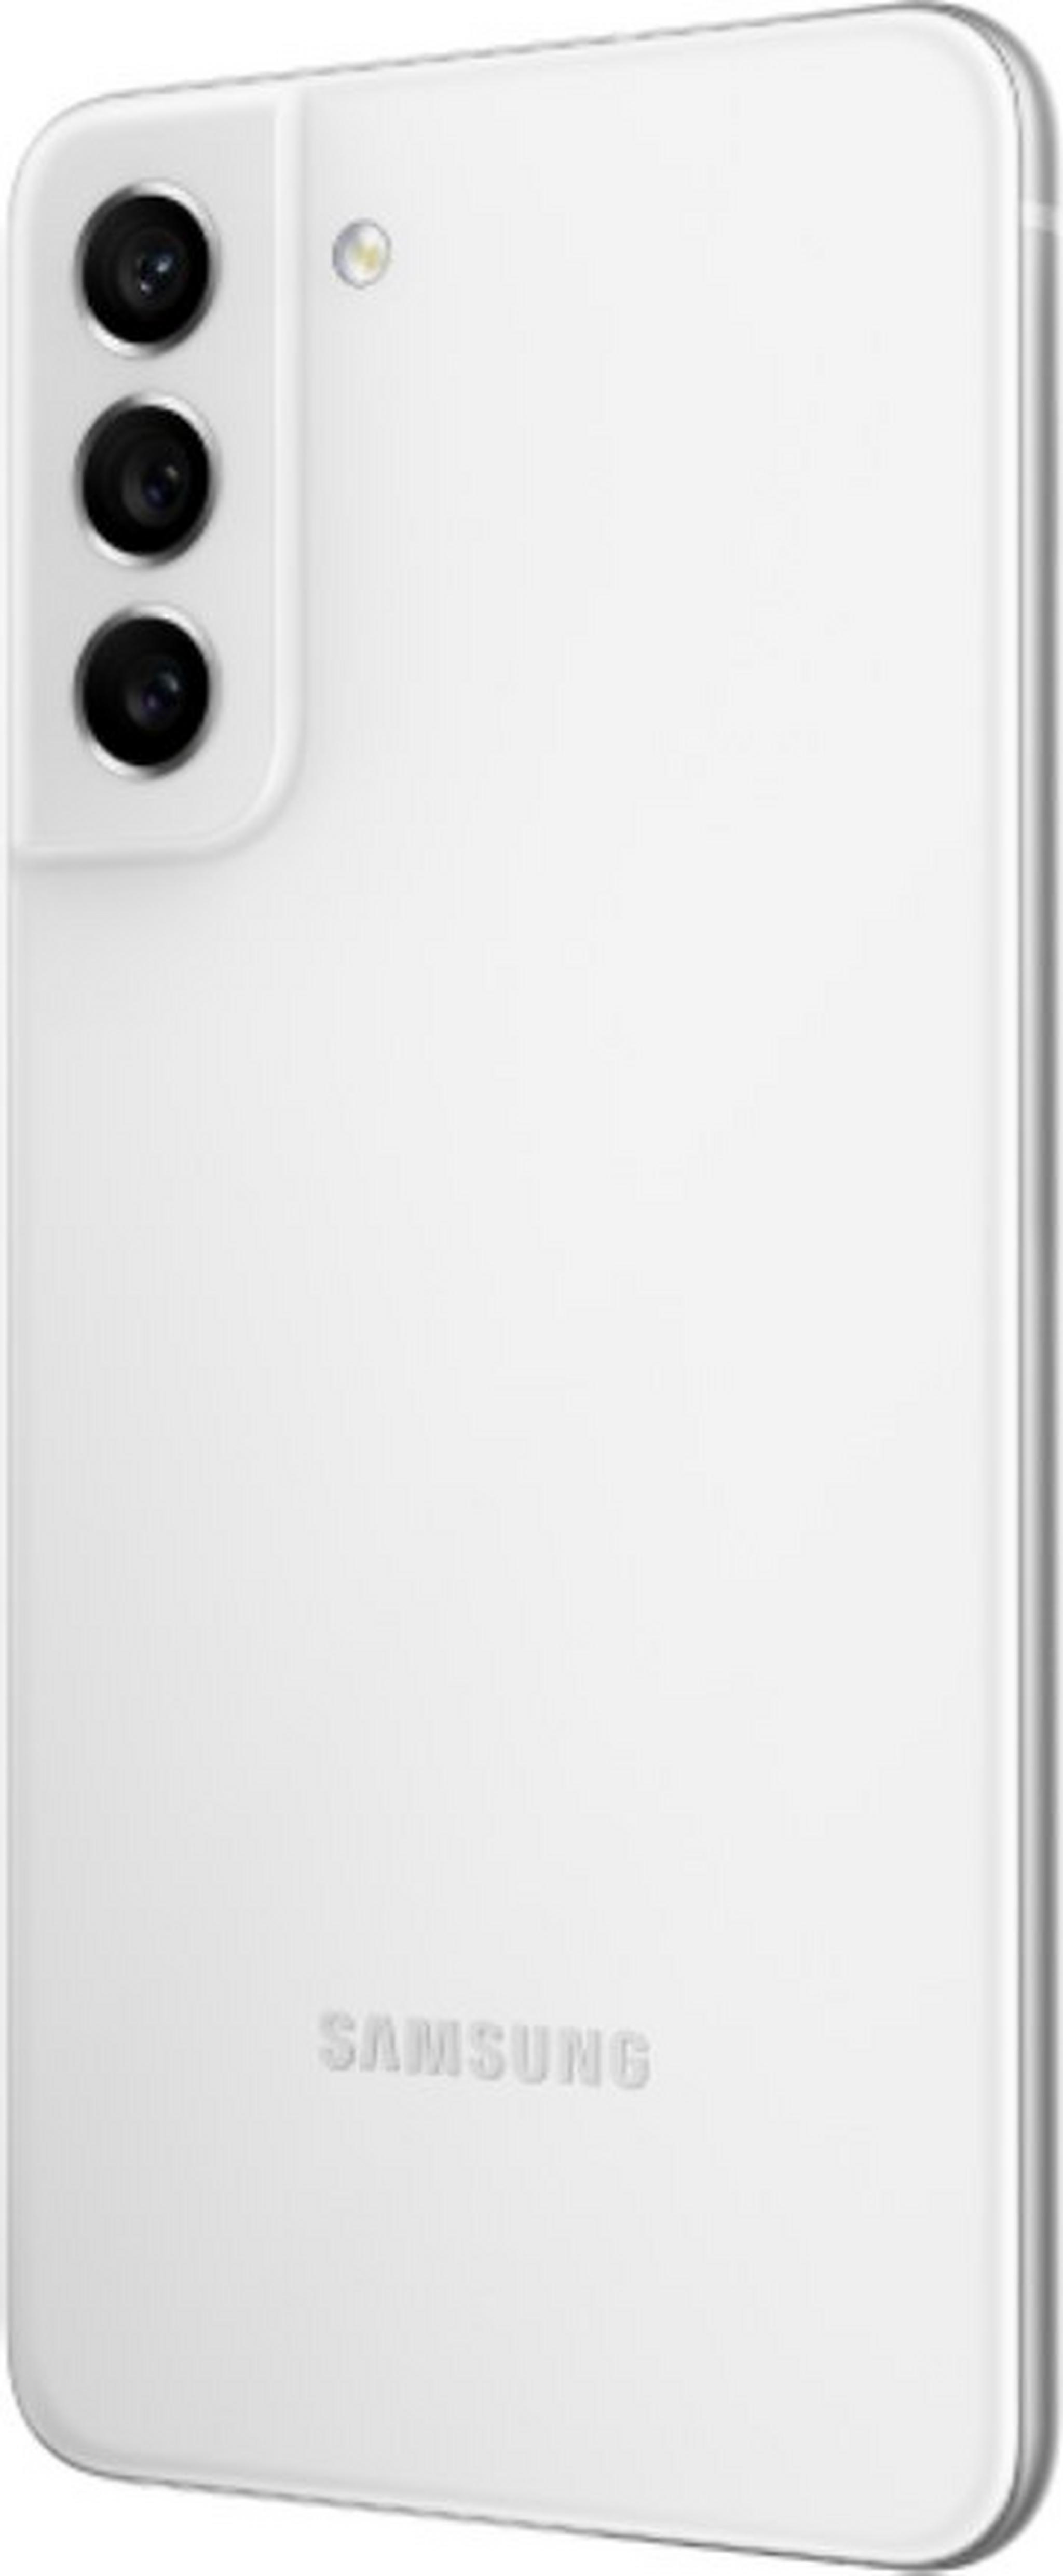 Samsung Galaxy S21 FE 5G 128GB Phone - White